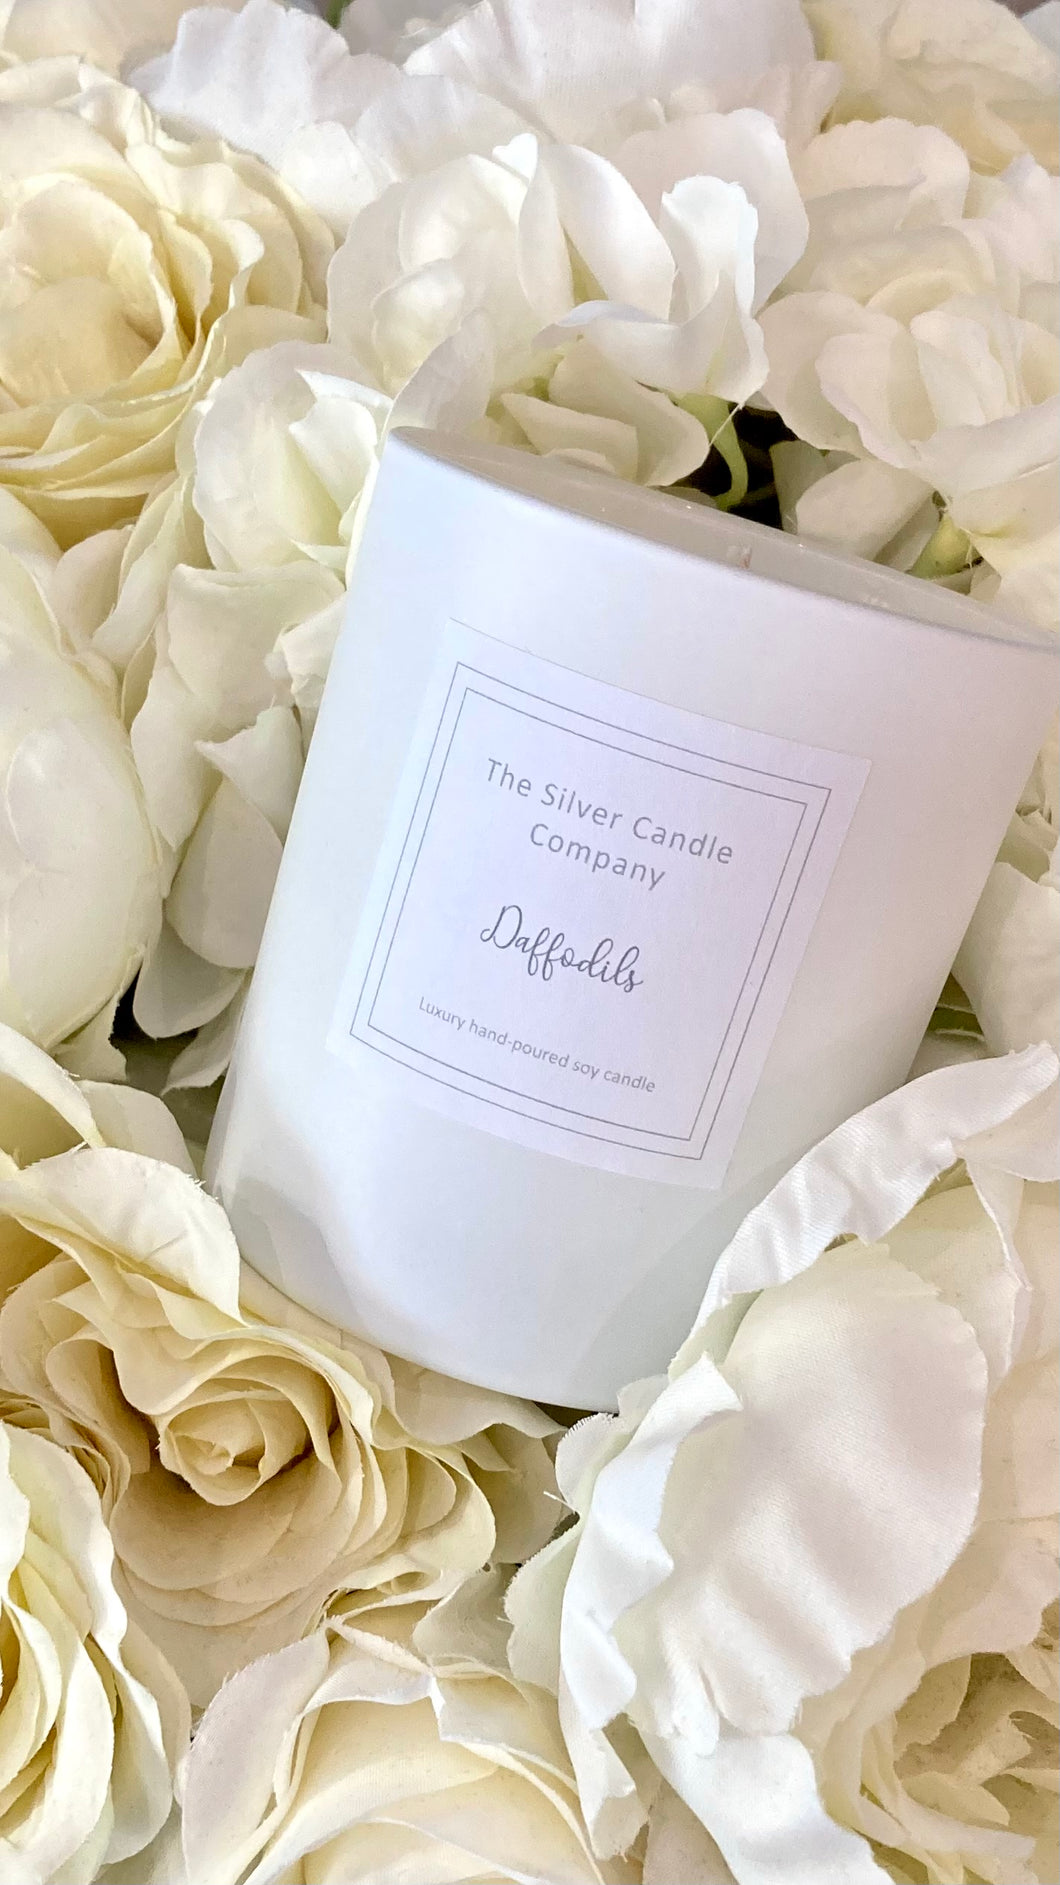 Daffodils Spring Limited Edition